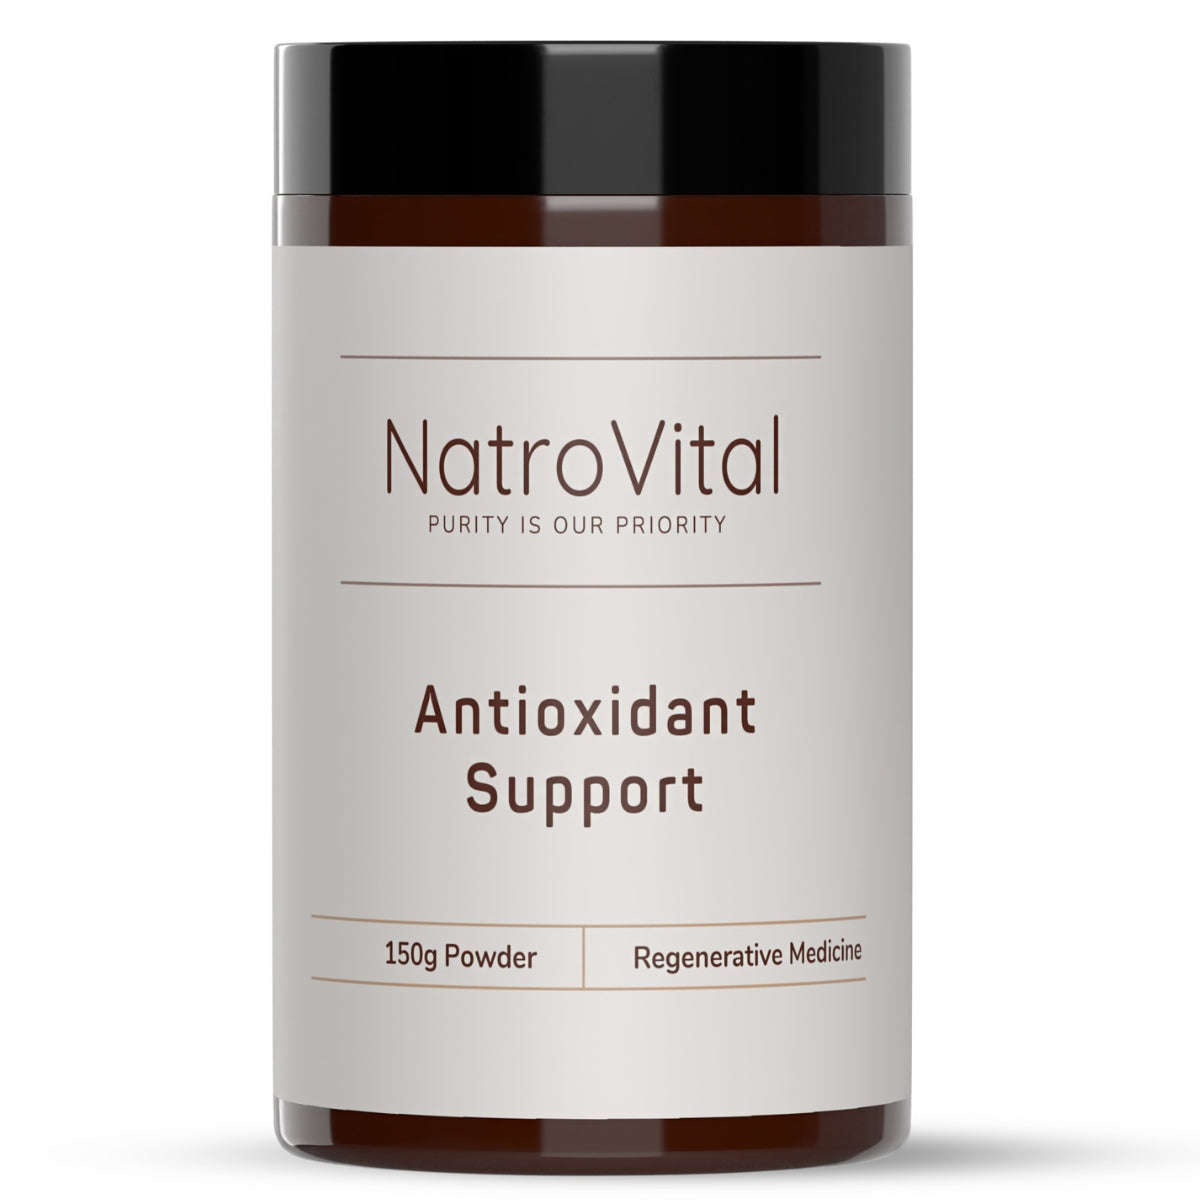 NatroVital Antioxidant Support